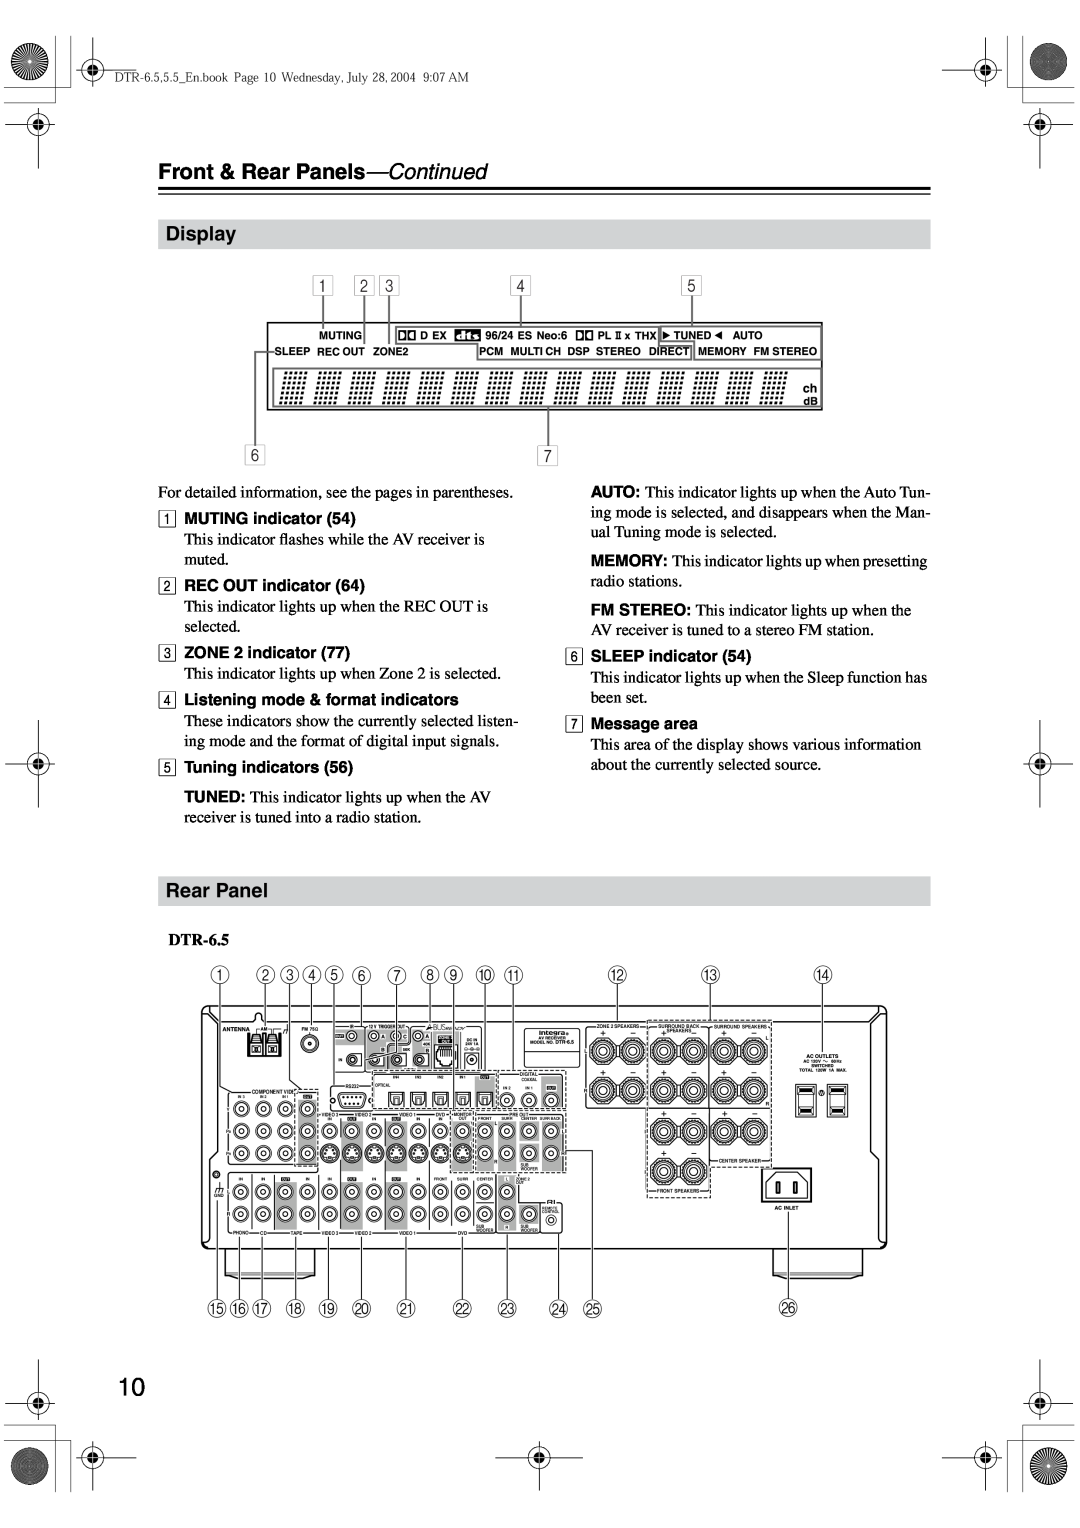 Integra DTR-5.5 instruction manual Display, B CDE 6 G H9 J K, Front & Rear Panels—Continued, Opq R S T, DTR-6.5 